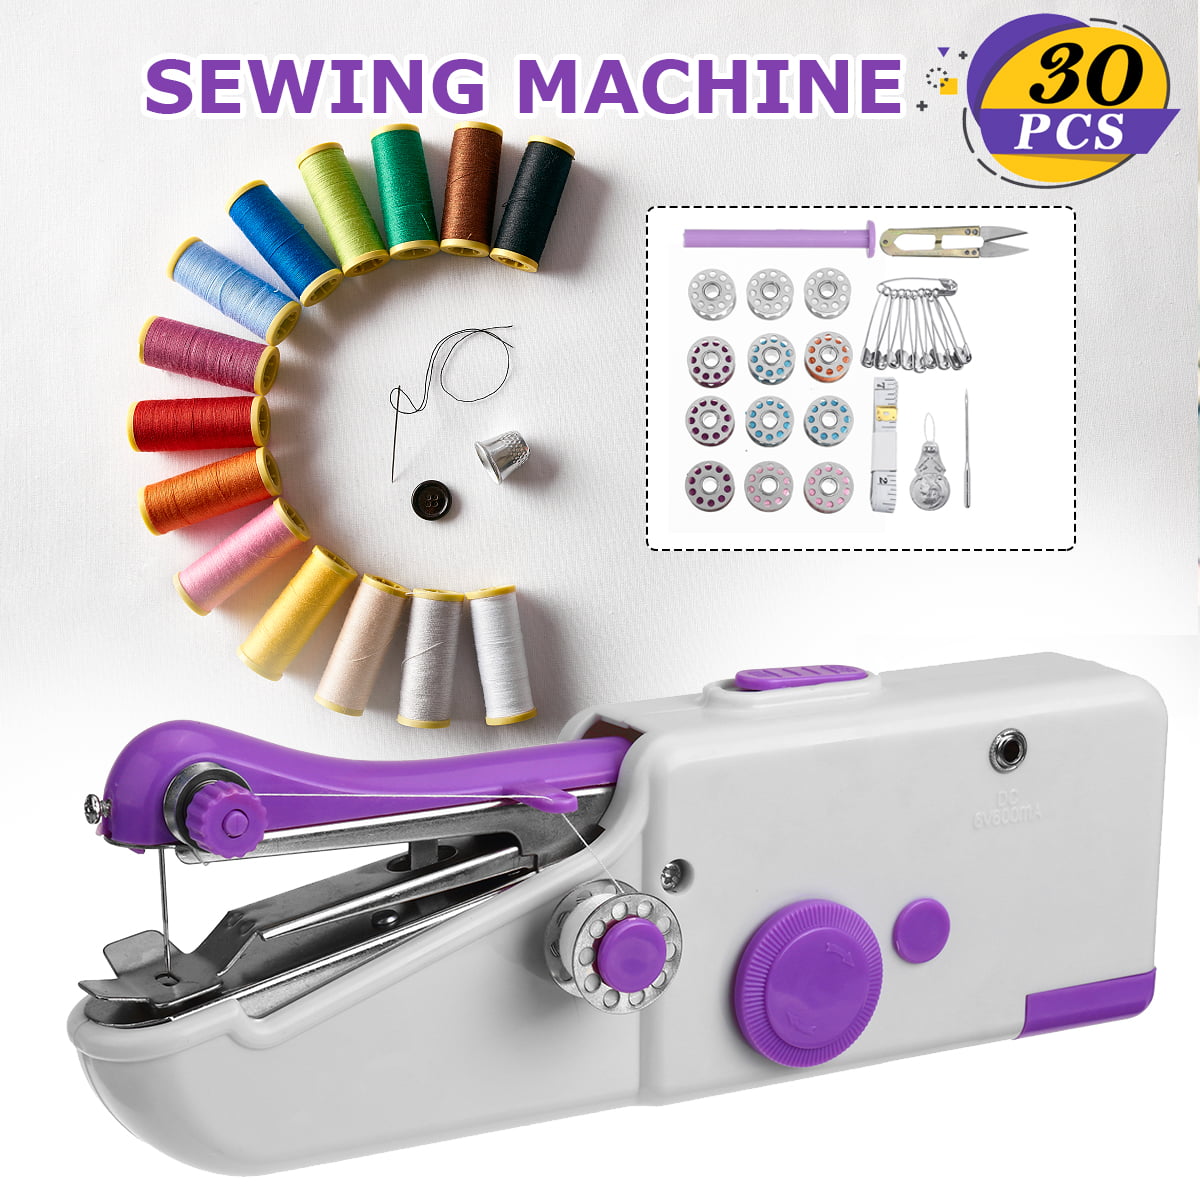 SAFETYON Sewing Machine 30 Pieces Mini Hand Sewing Machine Portable Handheld Sewing Machine Convenient Quick Sewing Machine